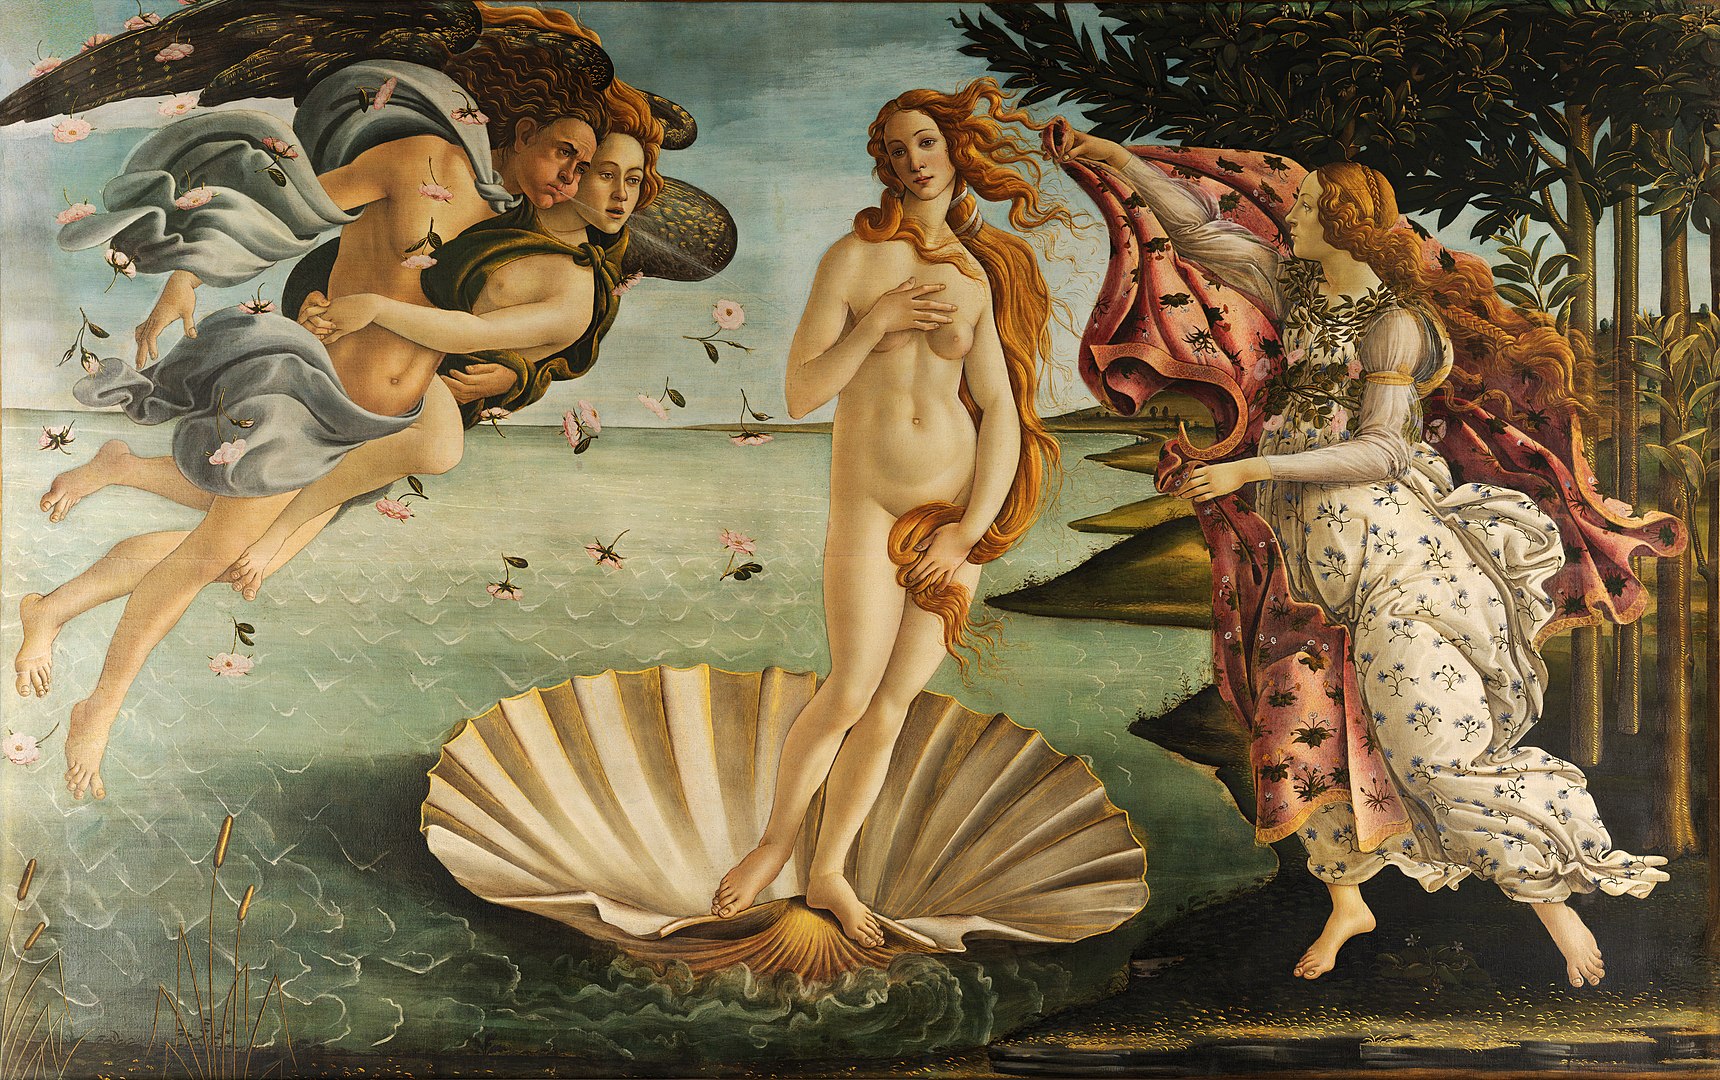 Sandro Botticelli’s Iconic Painting The Birth of Venus